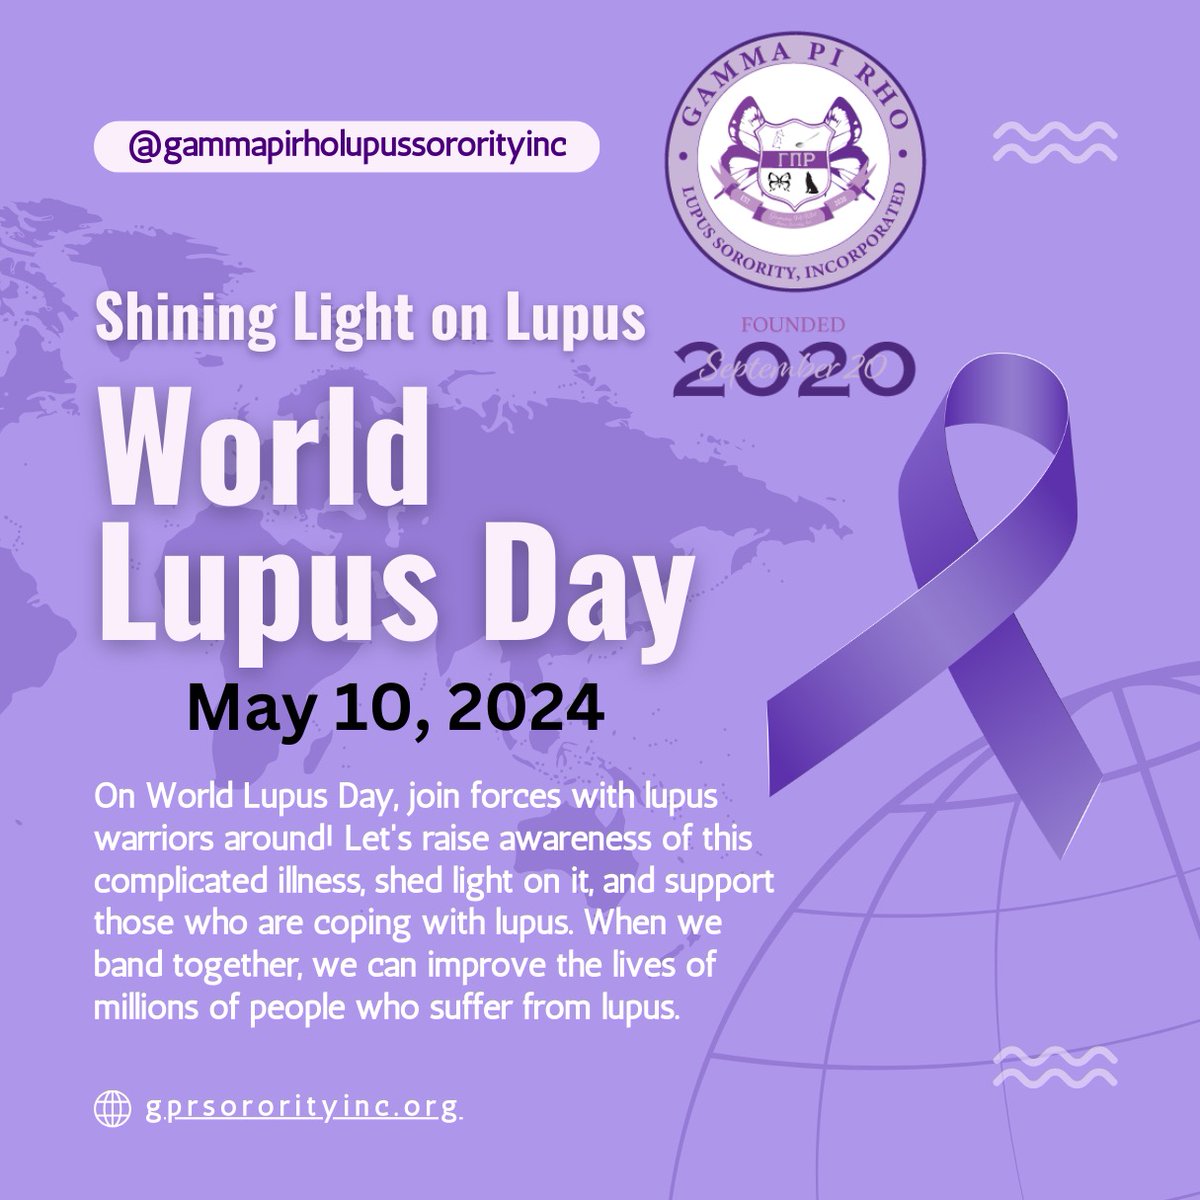 Today we all come together to spread Lupus Awareness to one and all. Get to know Lupus to say NO Lupus

#glamorousgammas  
#gammapirholupussororityinc 💎⚪️💎⚪️
 #gprlsi #gettoknowlupustosaynolupus 
 #lupusadvocate #lupuswarrior  #lupusawareness #shinebrightlikeadiamond